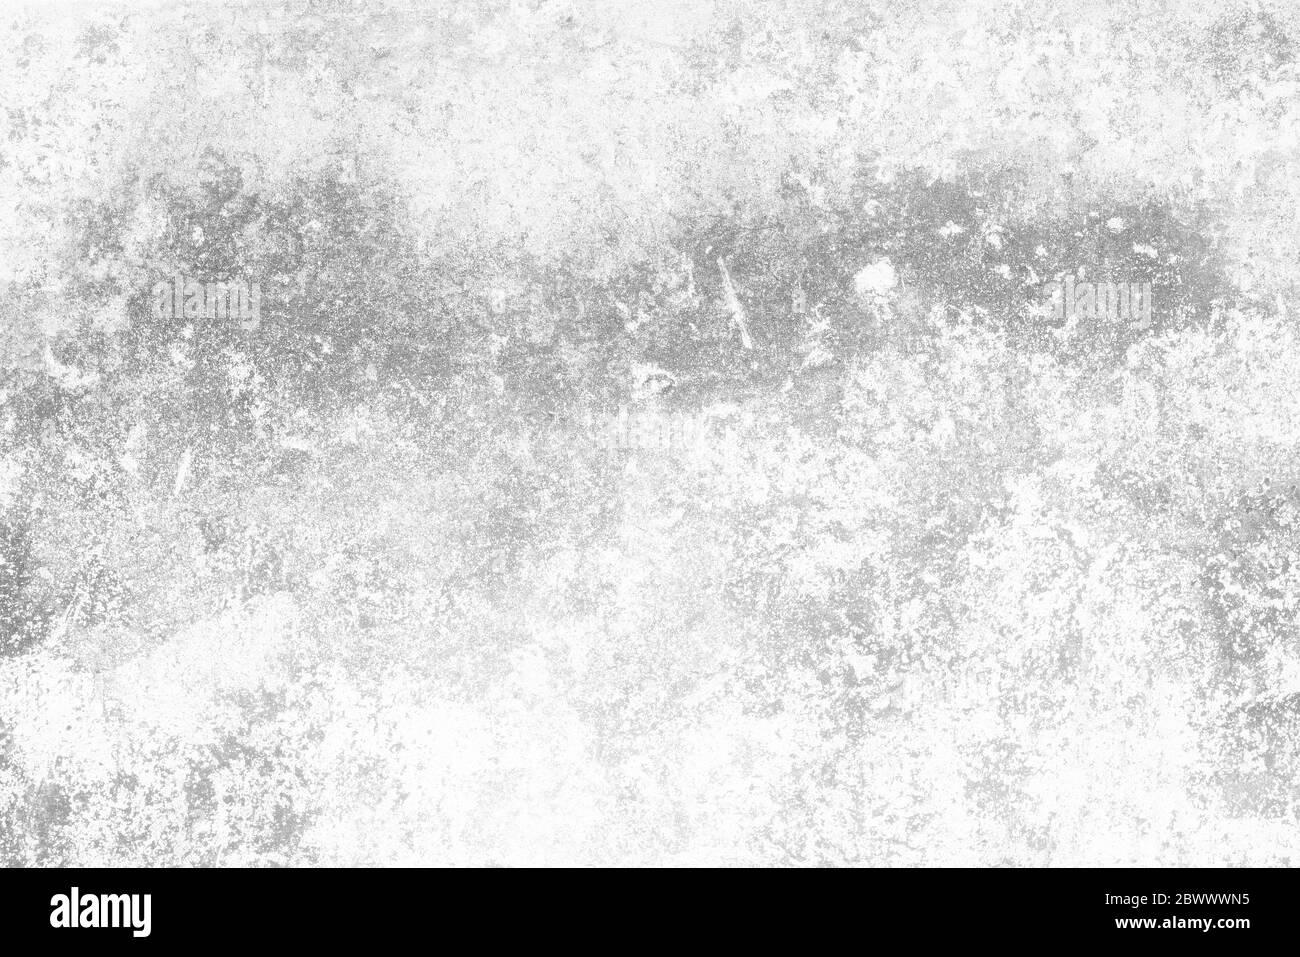 White Grunge Wall Texture Background. Stock Photo